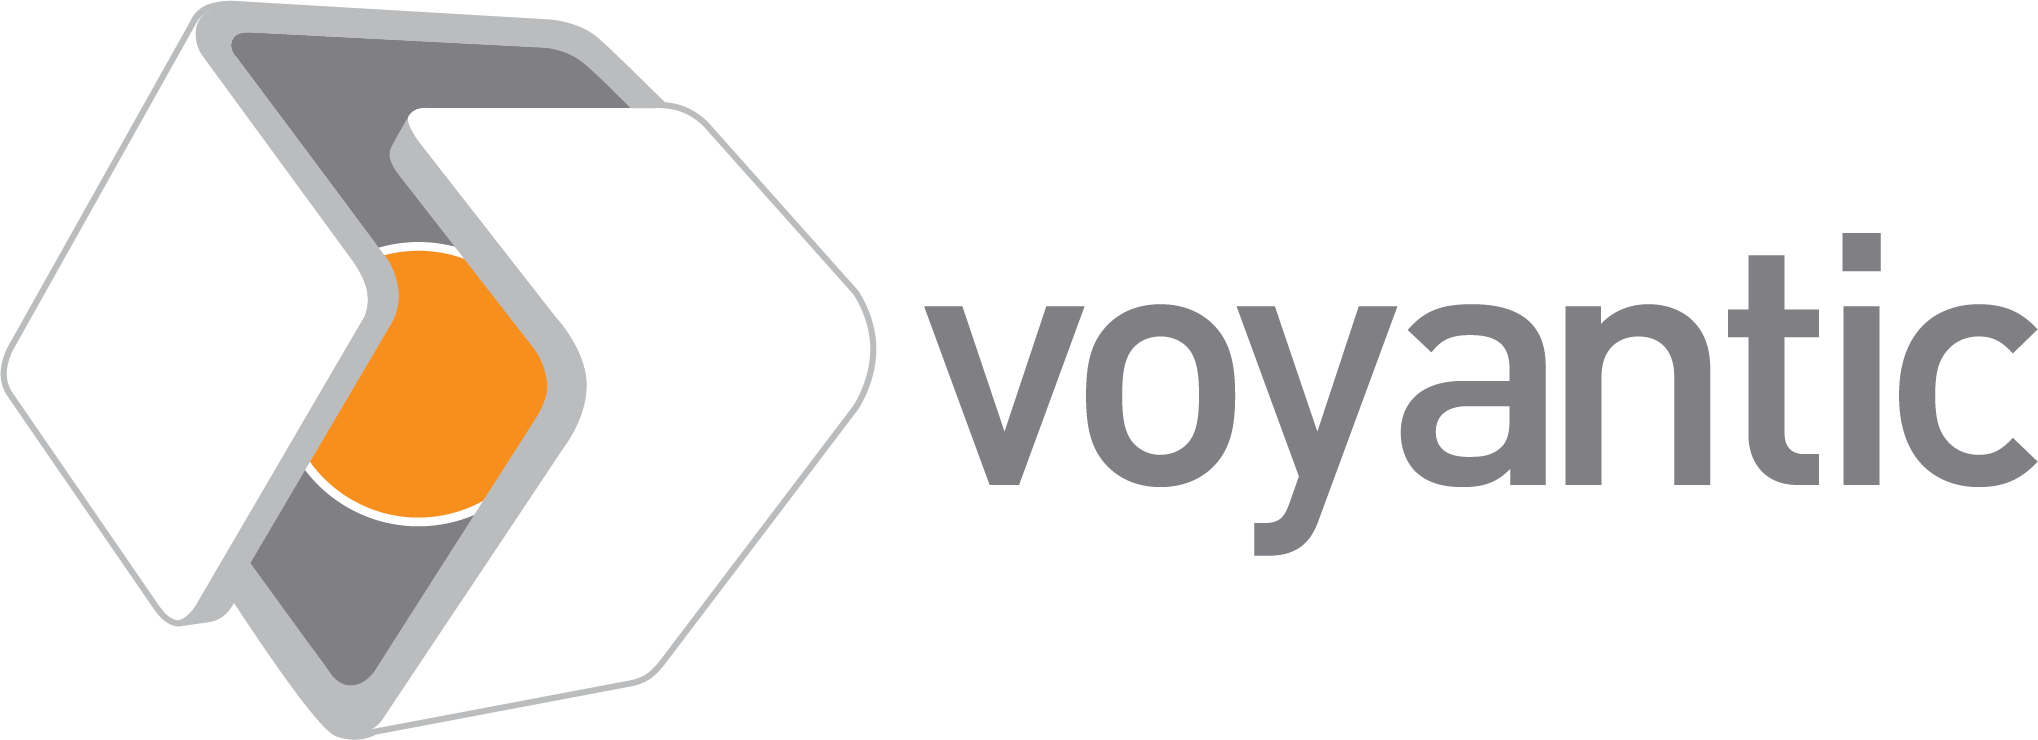 Voyantic - Gold Sponsor